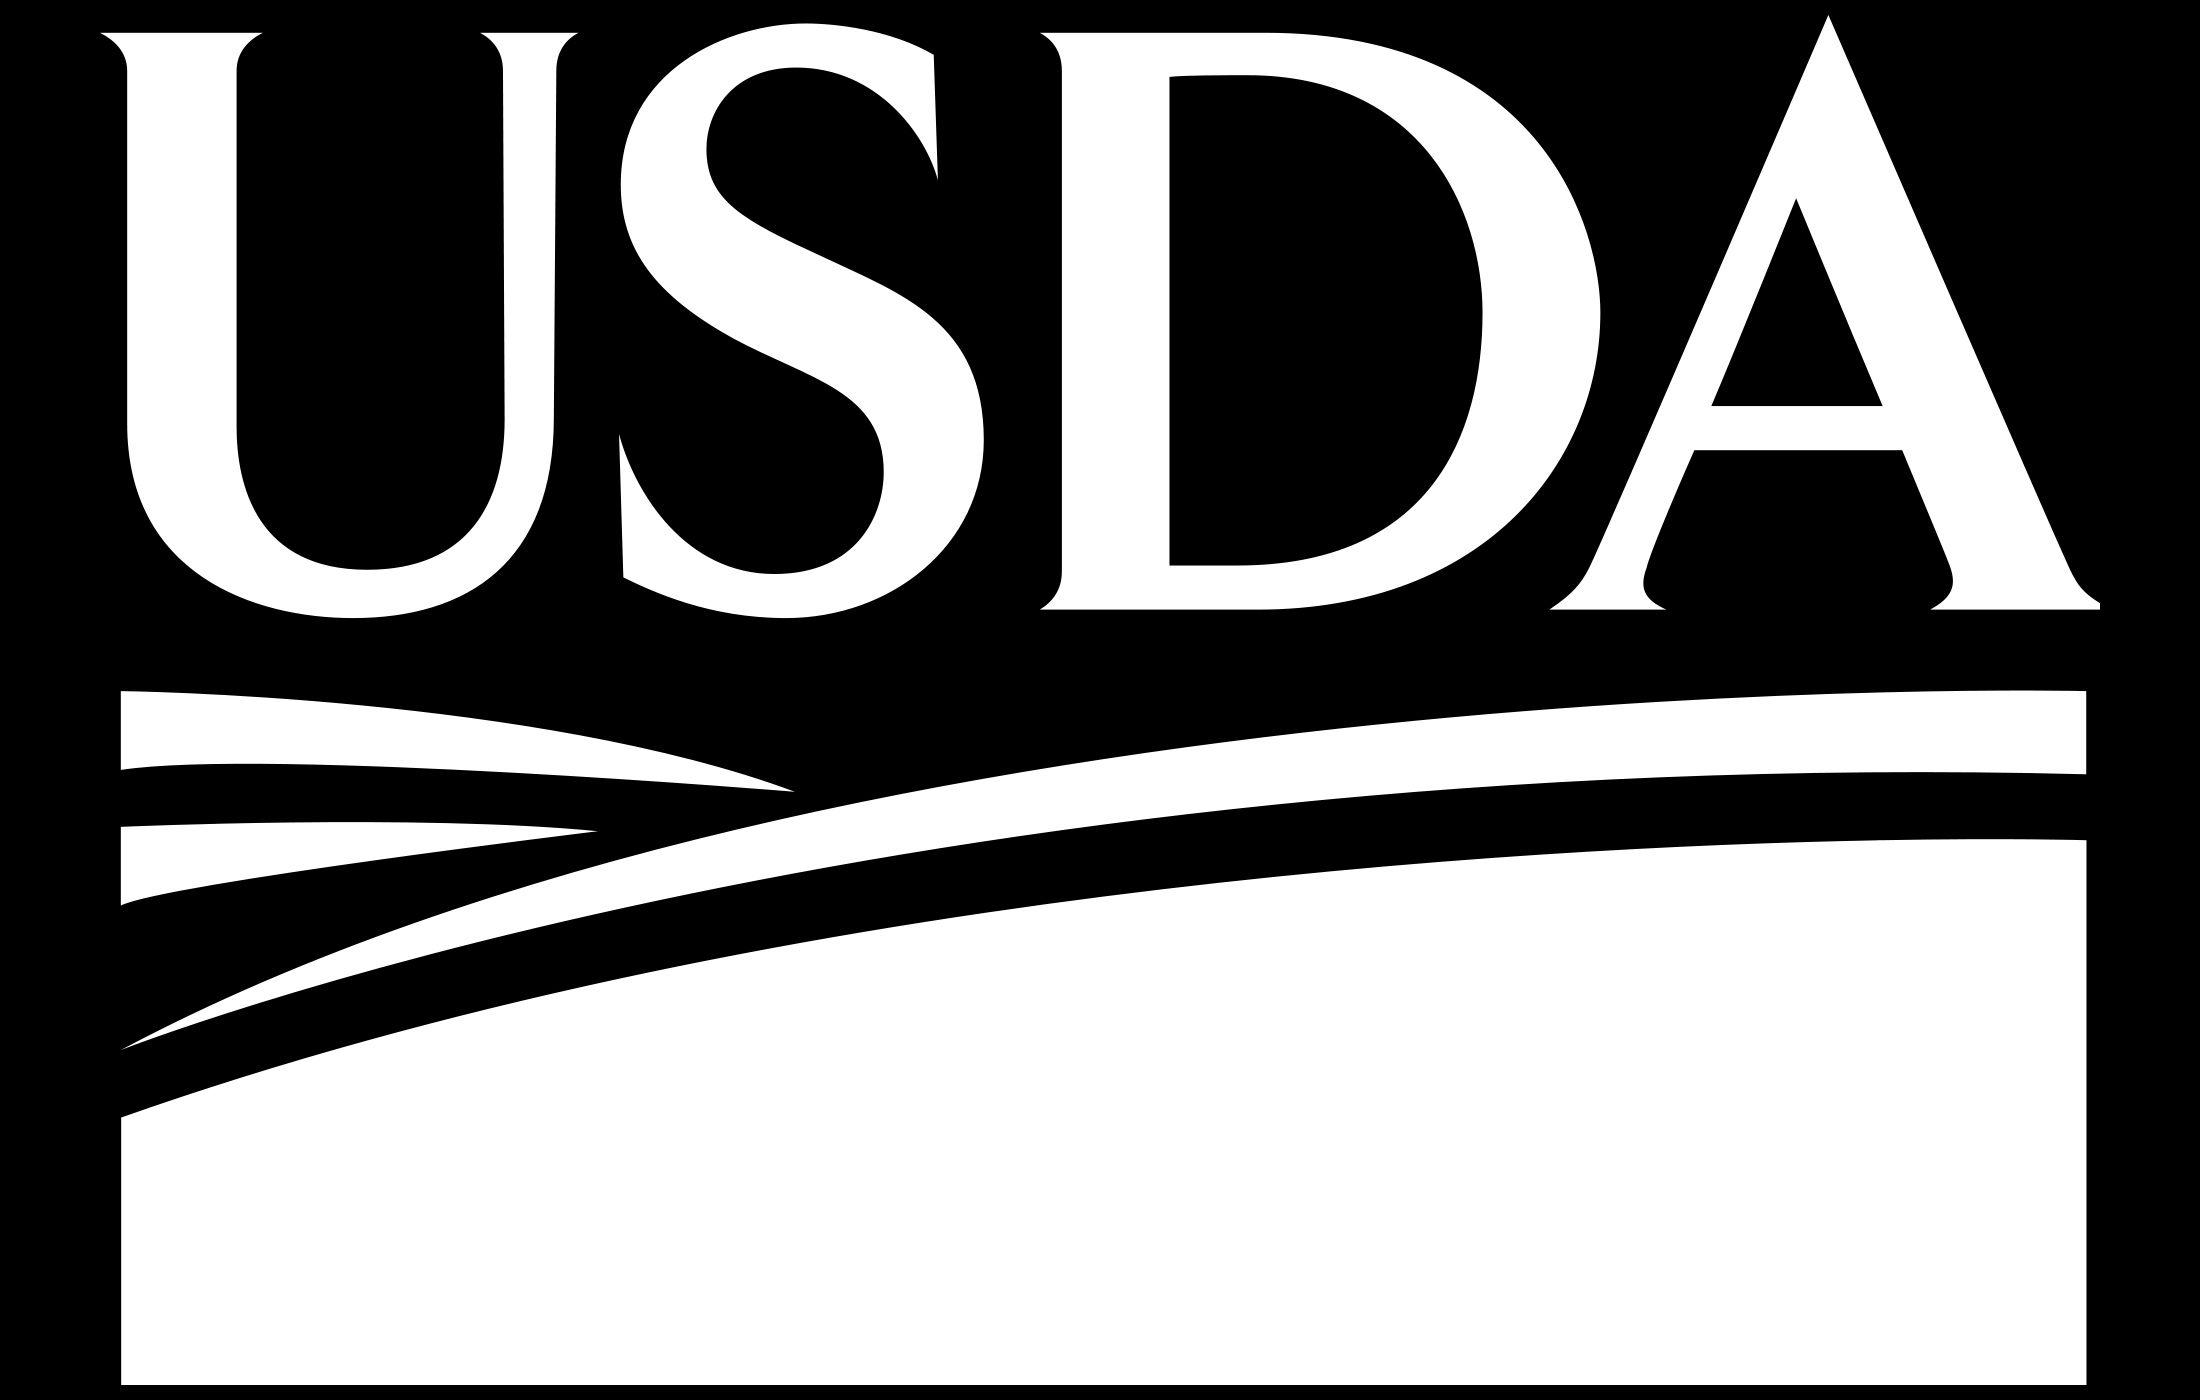 USDA Logo - USDA Logo, United States Department of Agriculture symbol